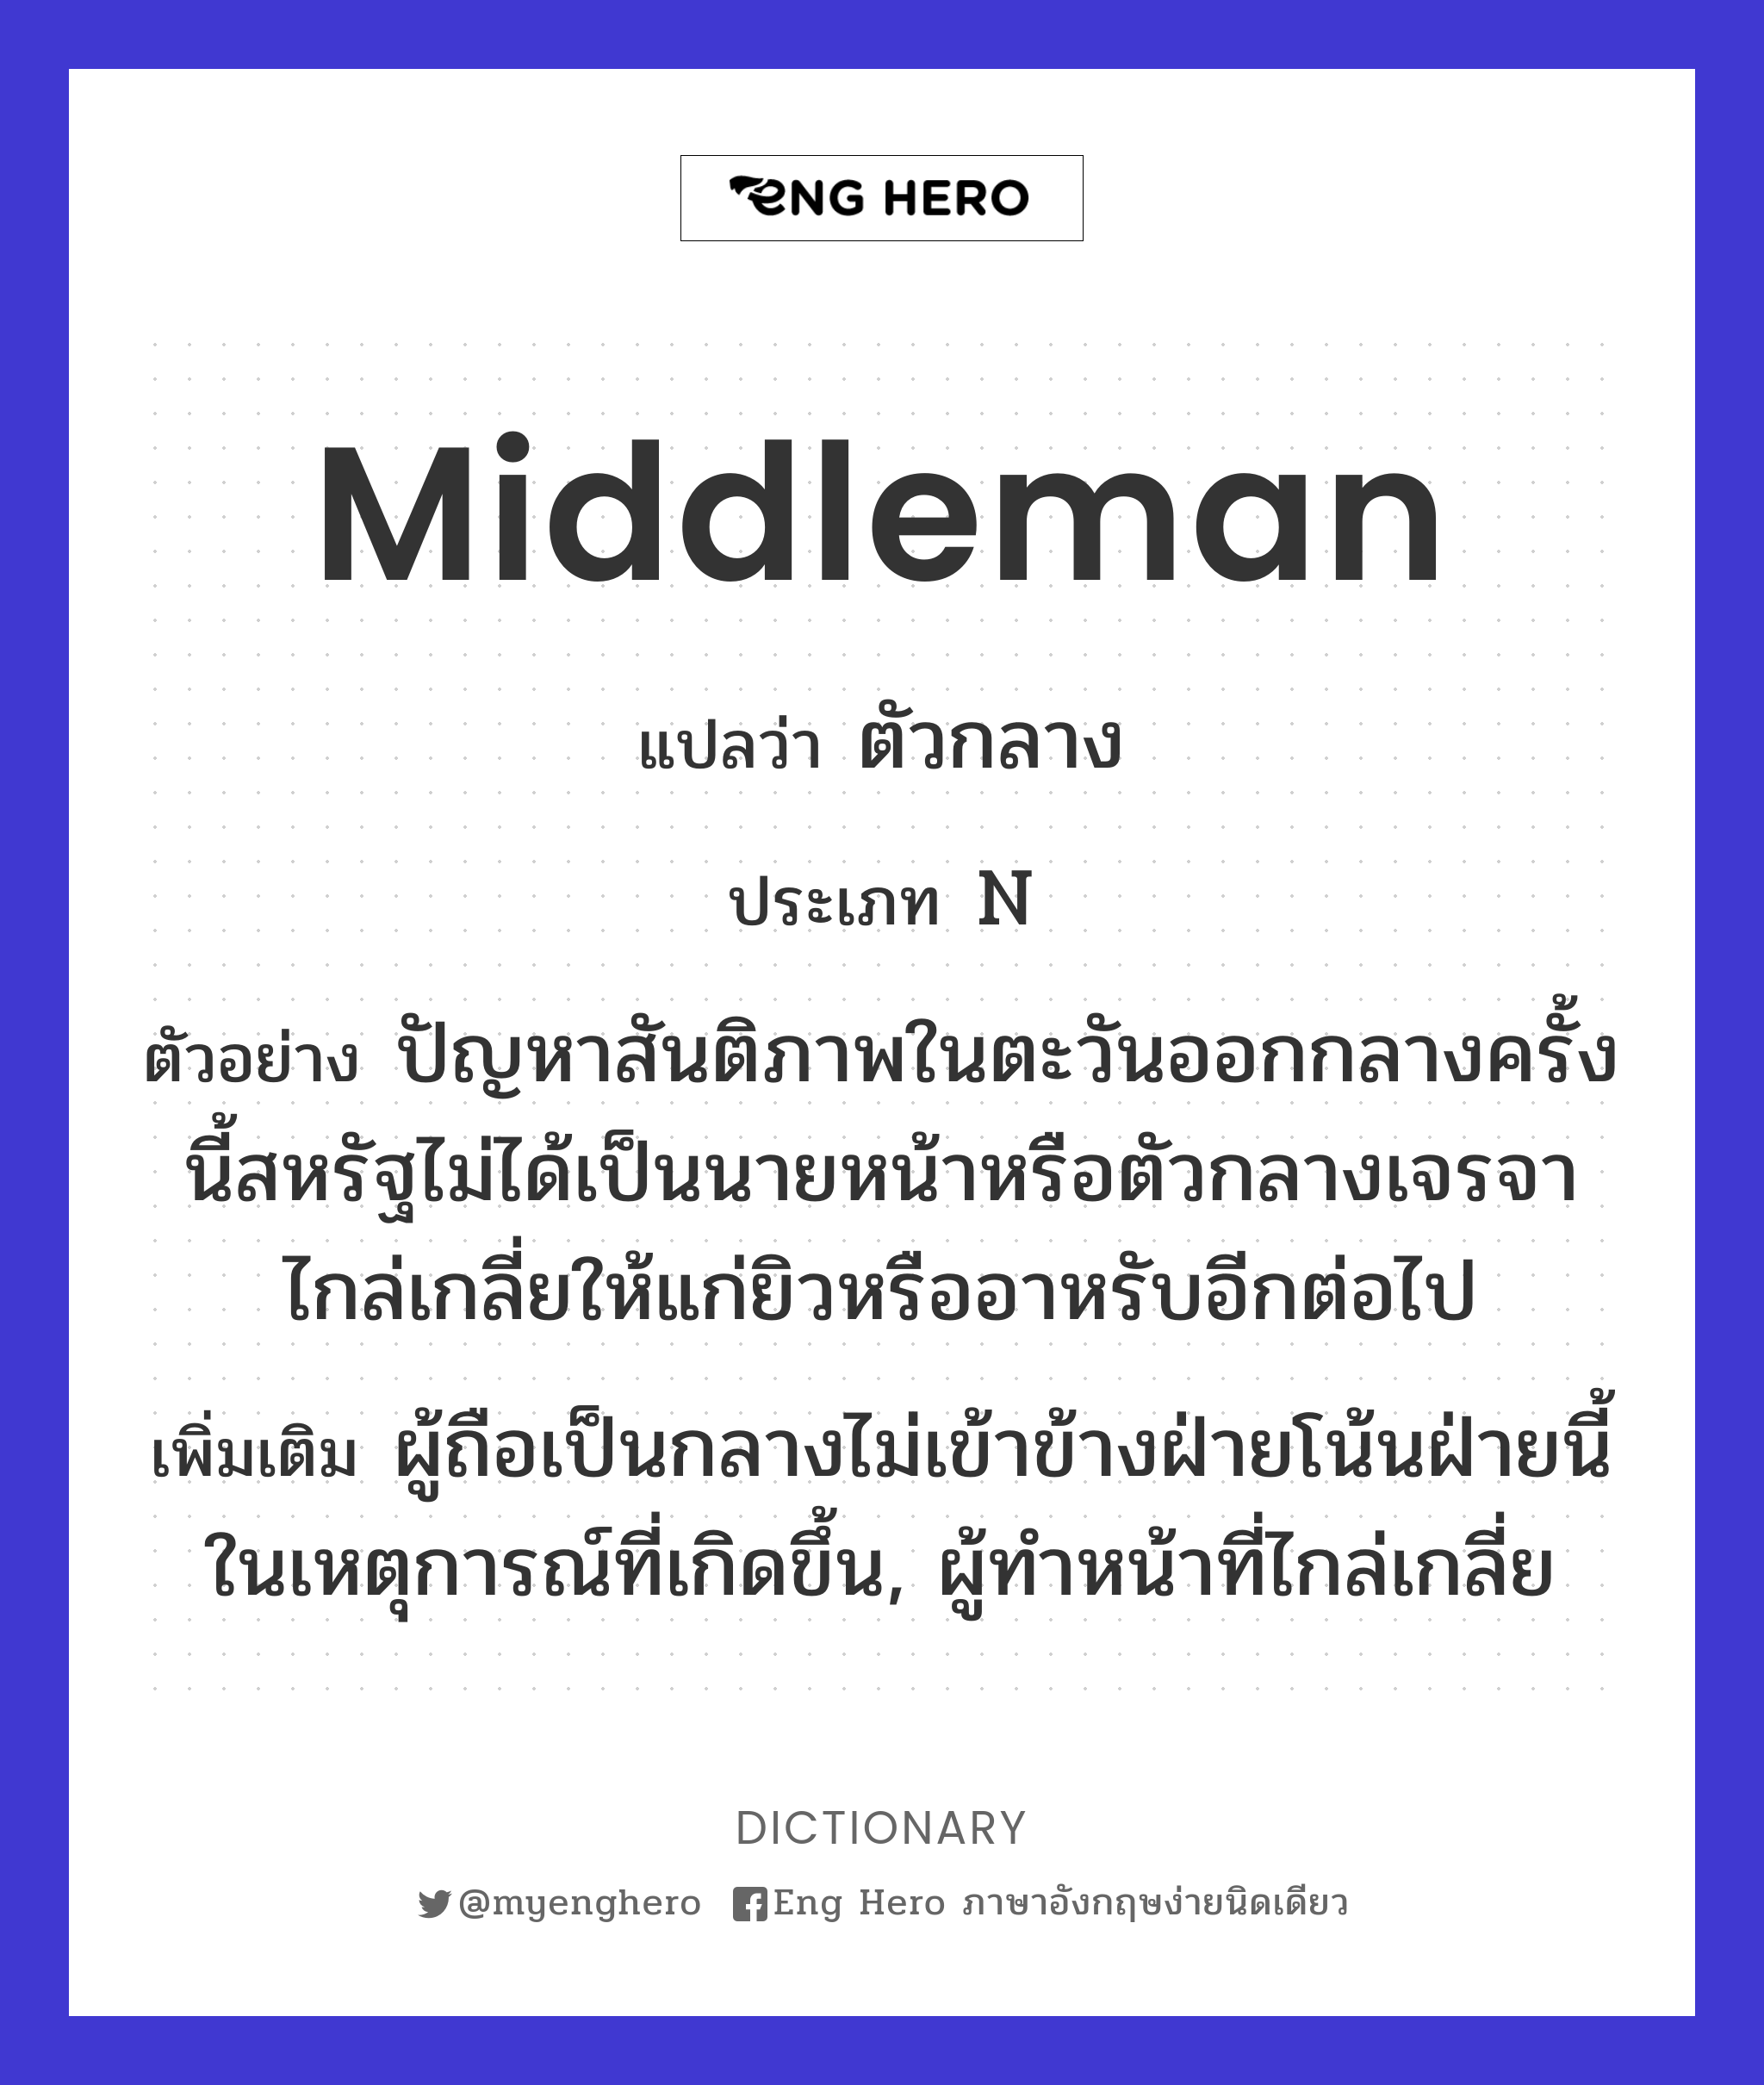 middleman